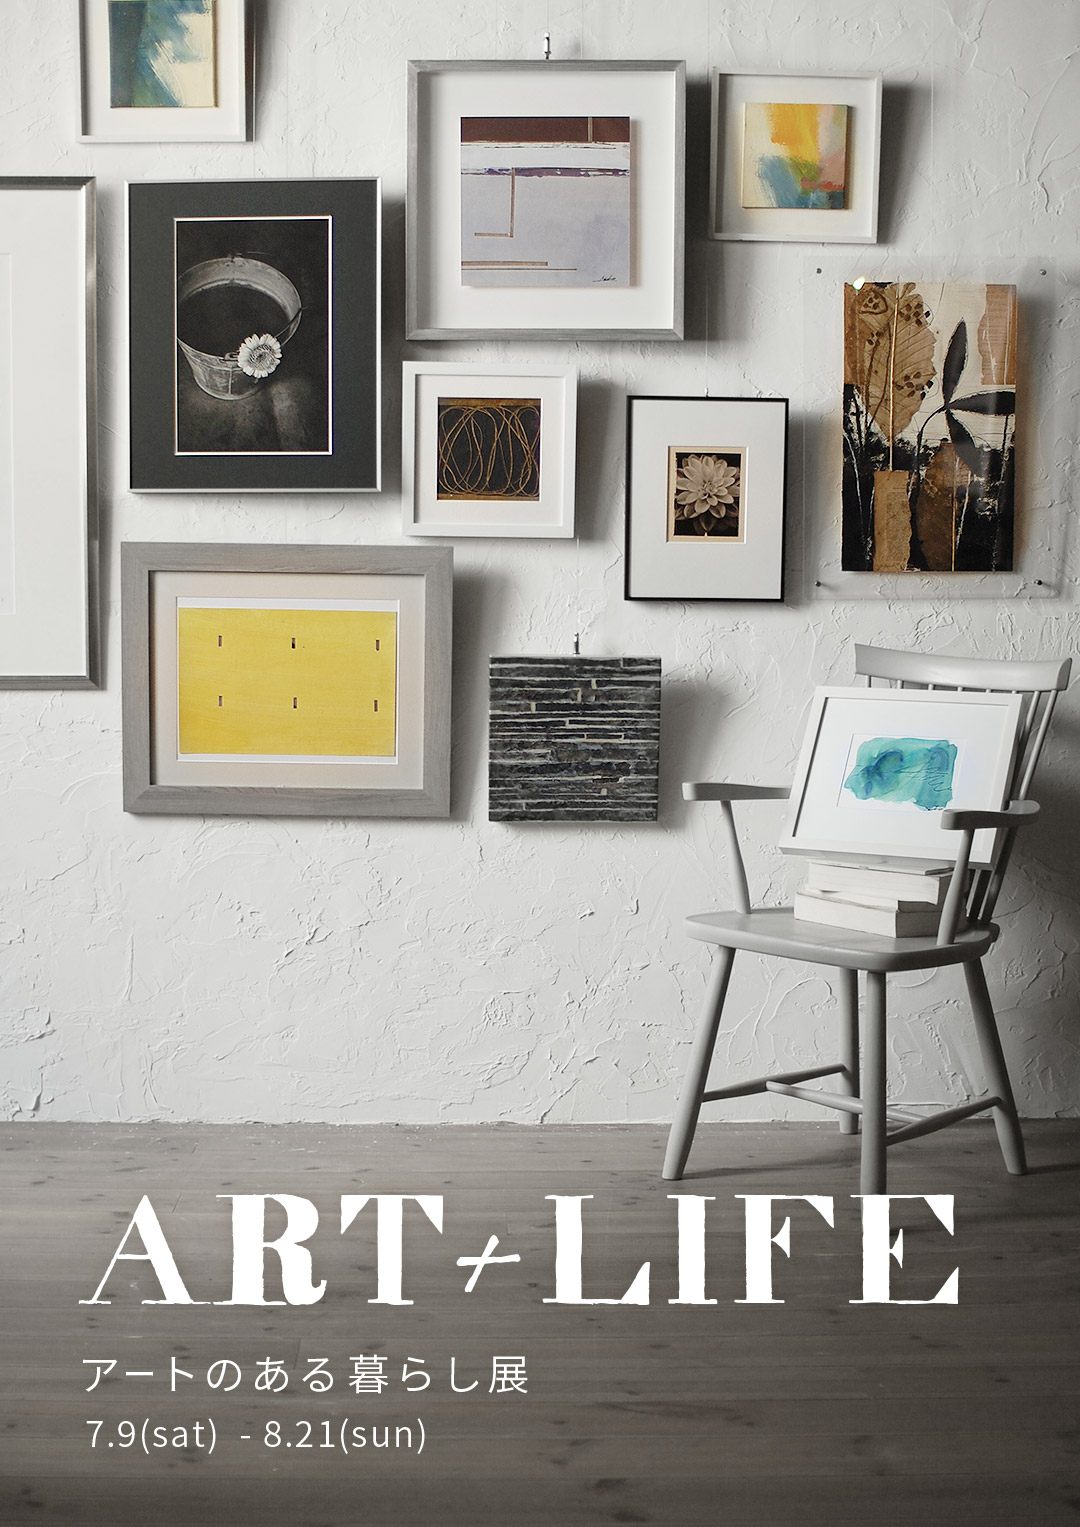 ART + LIFE アートのあるくらし展 | おしゃれな家具通販・インテリア ...